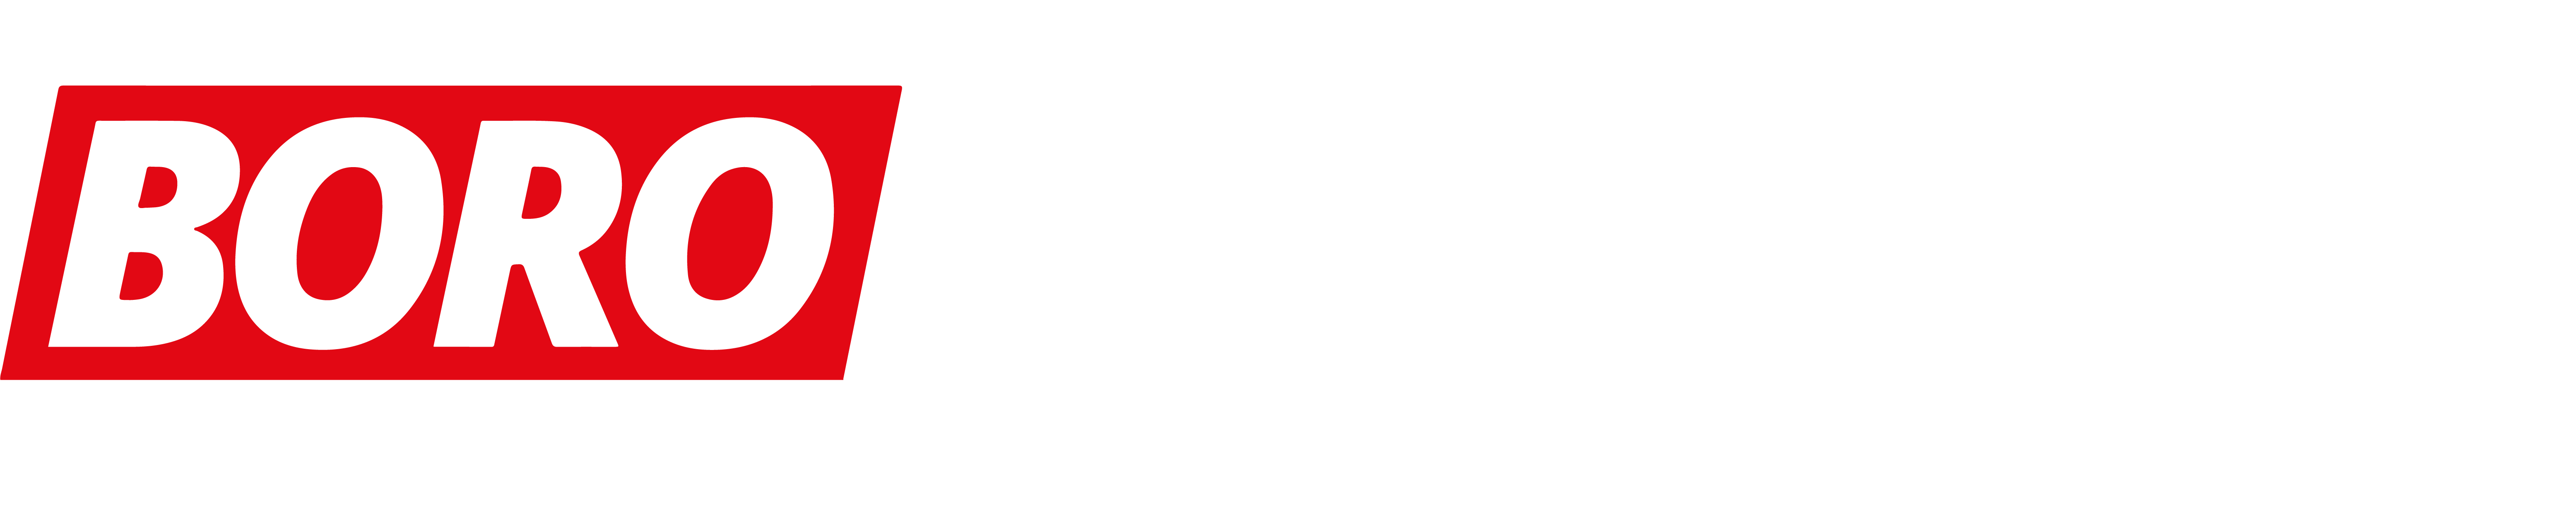 Boro Sports Limited